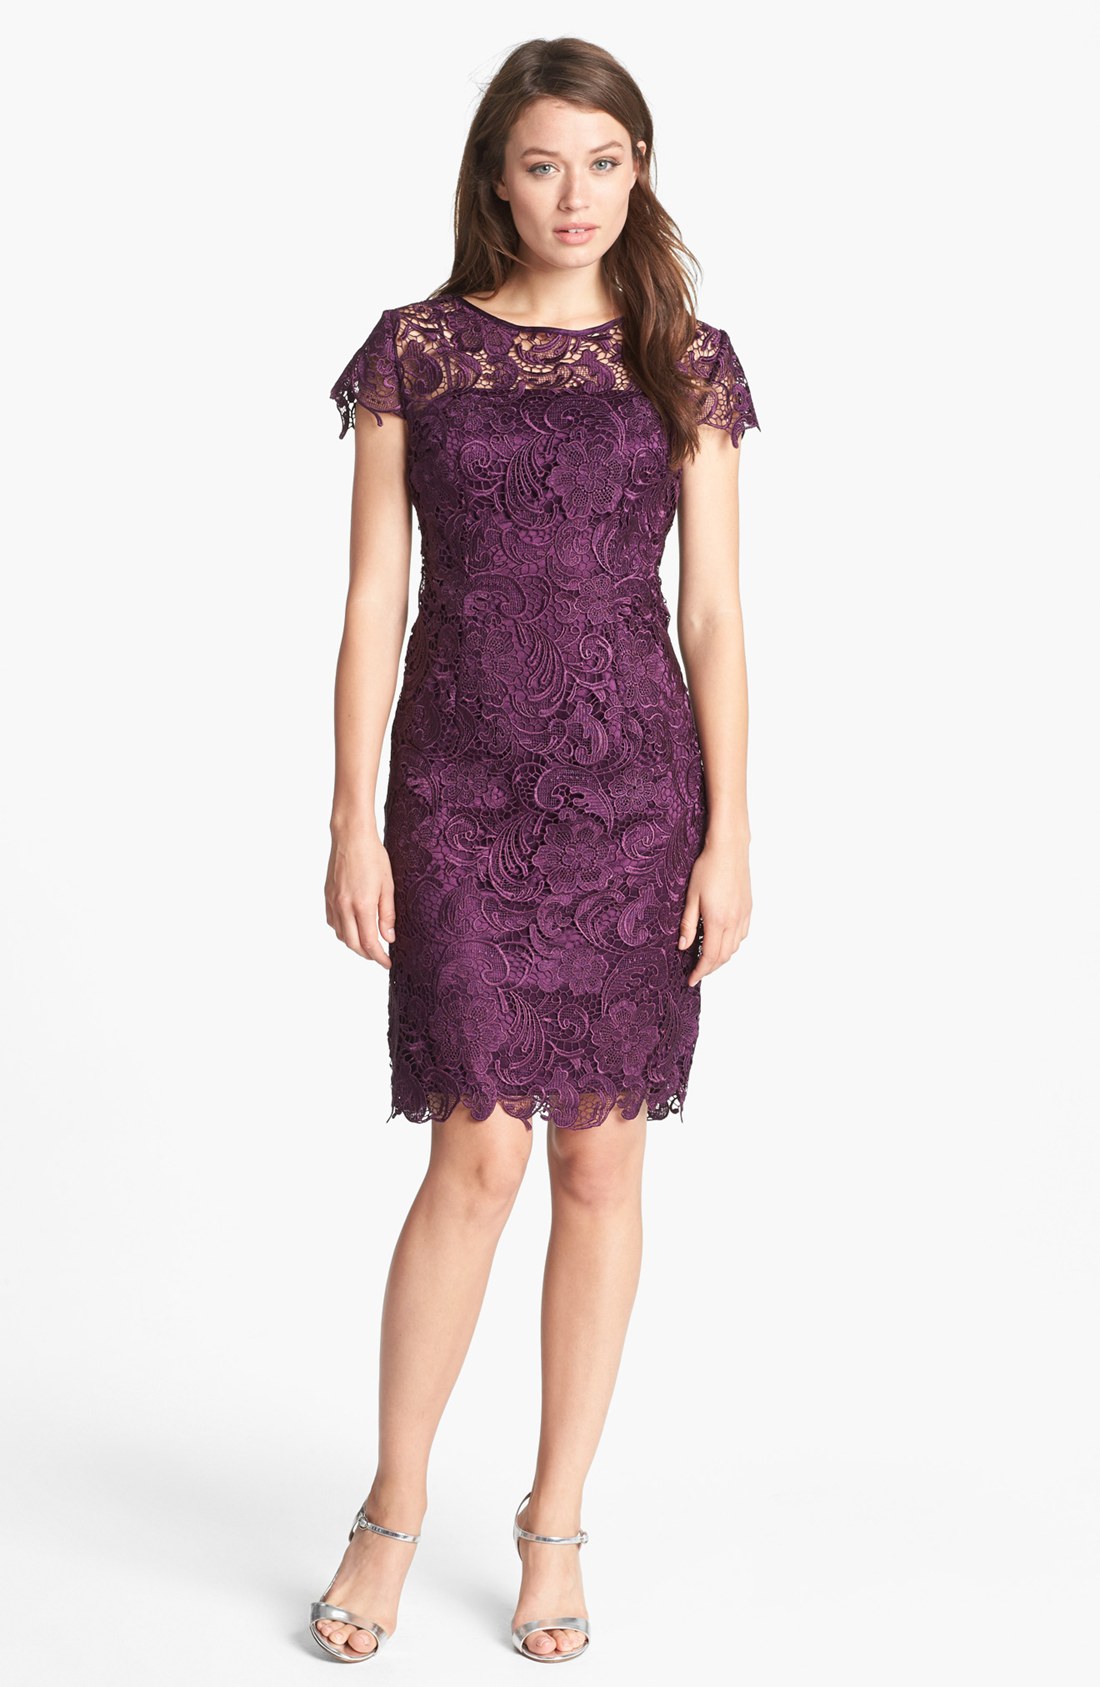 Patra Crocheted Venise Lace Sheath Dress in Purple (Eggplant)